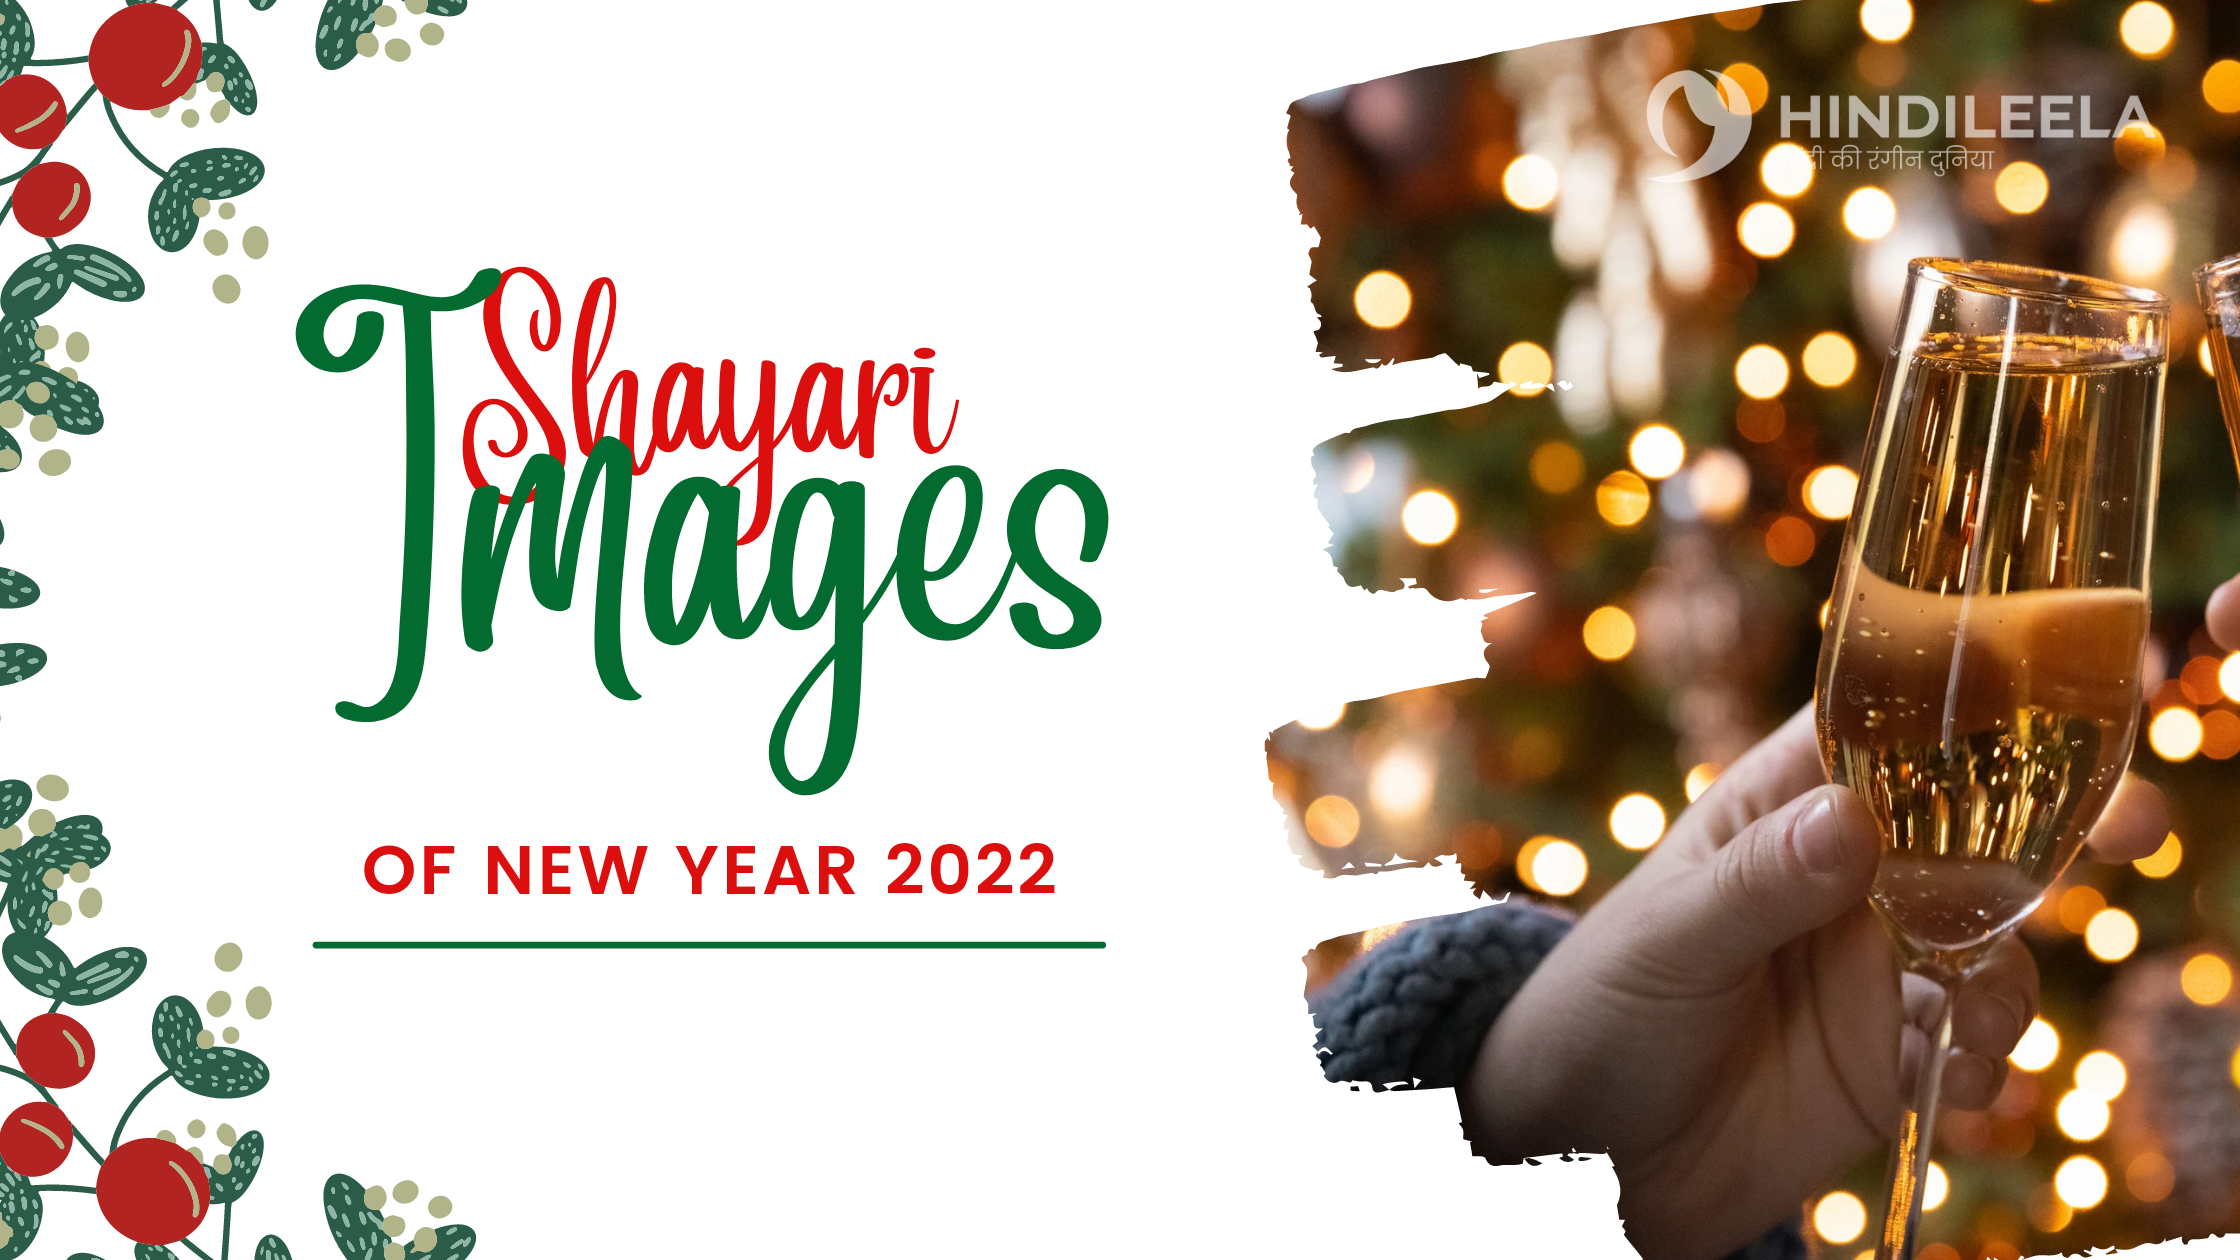 New Year 2022 Latest Shayari Images in Hindi